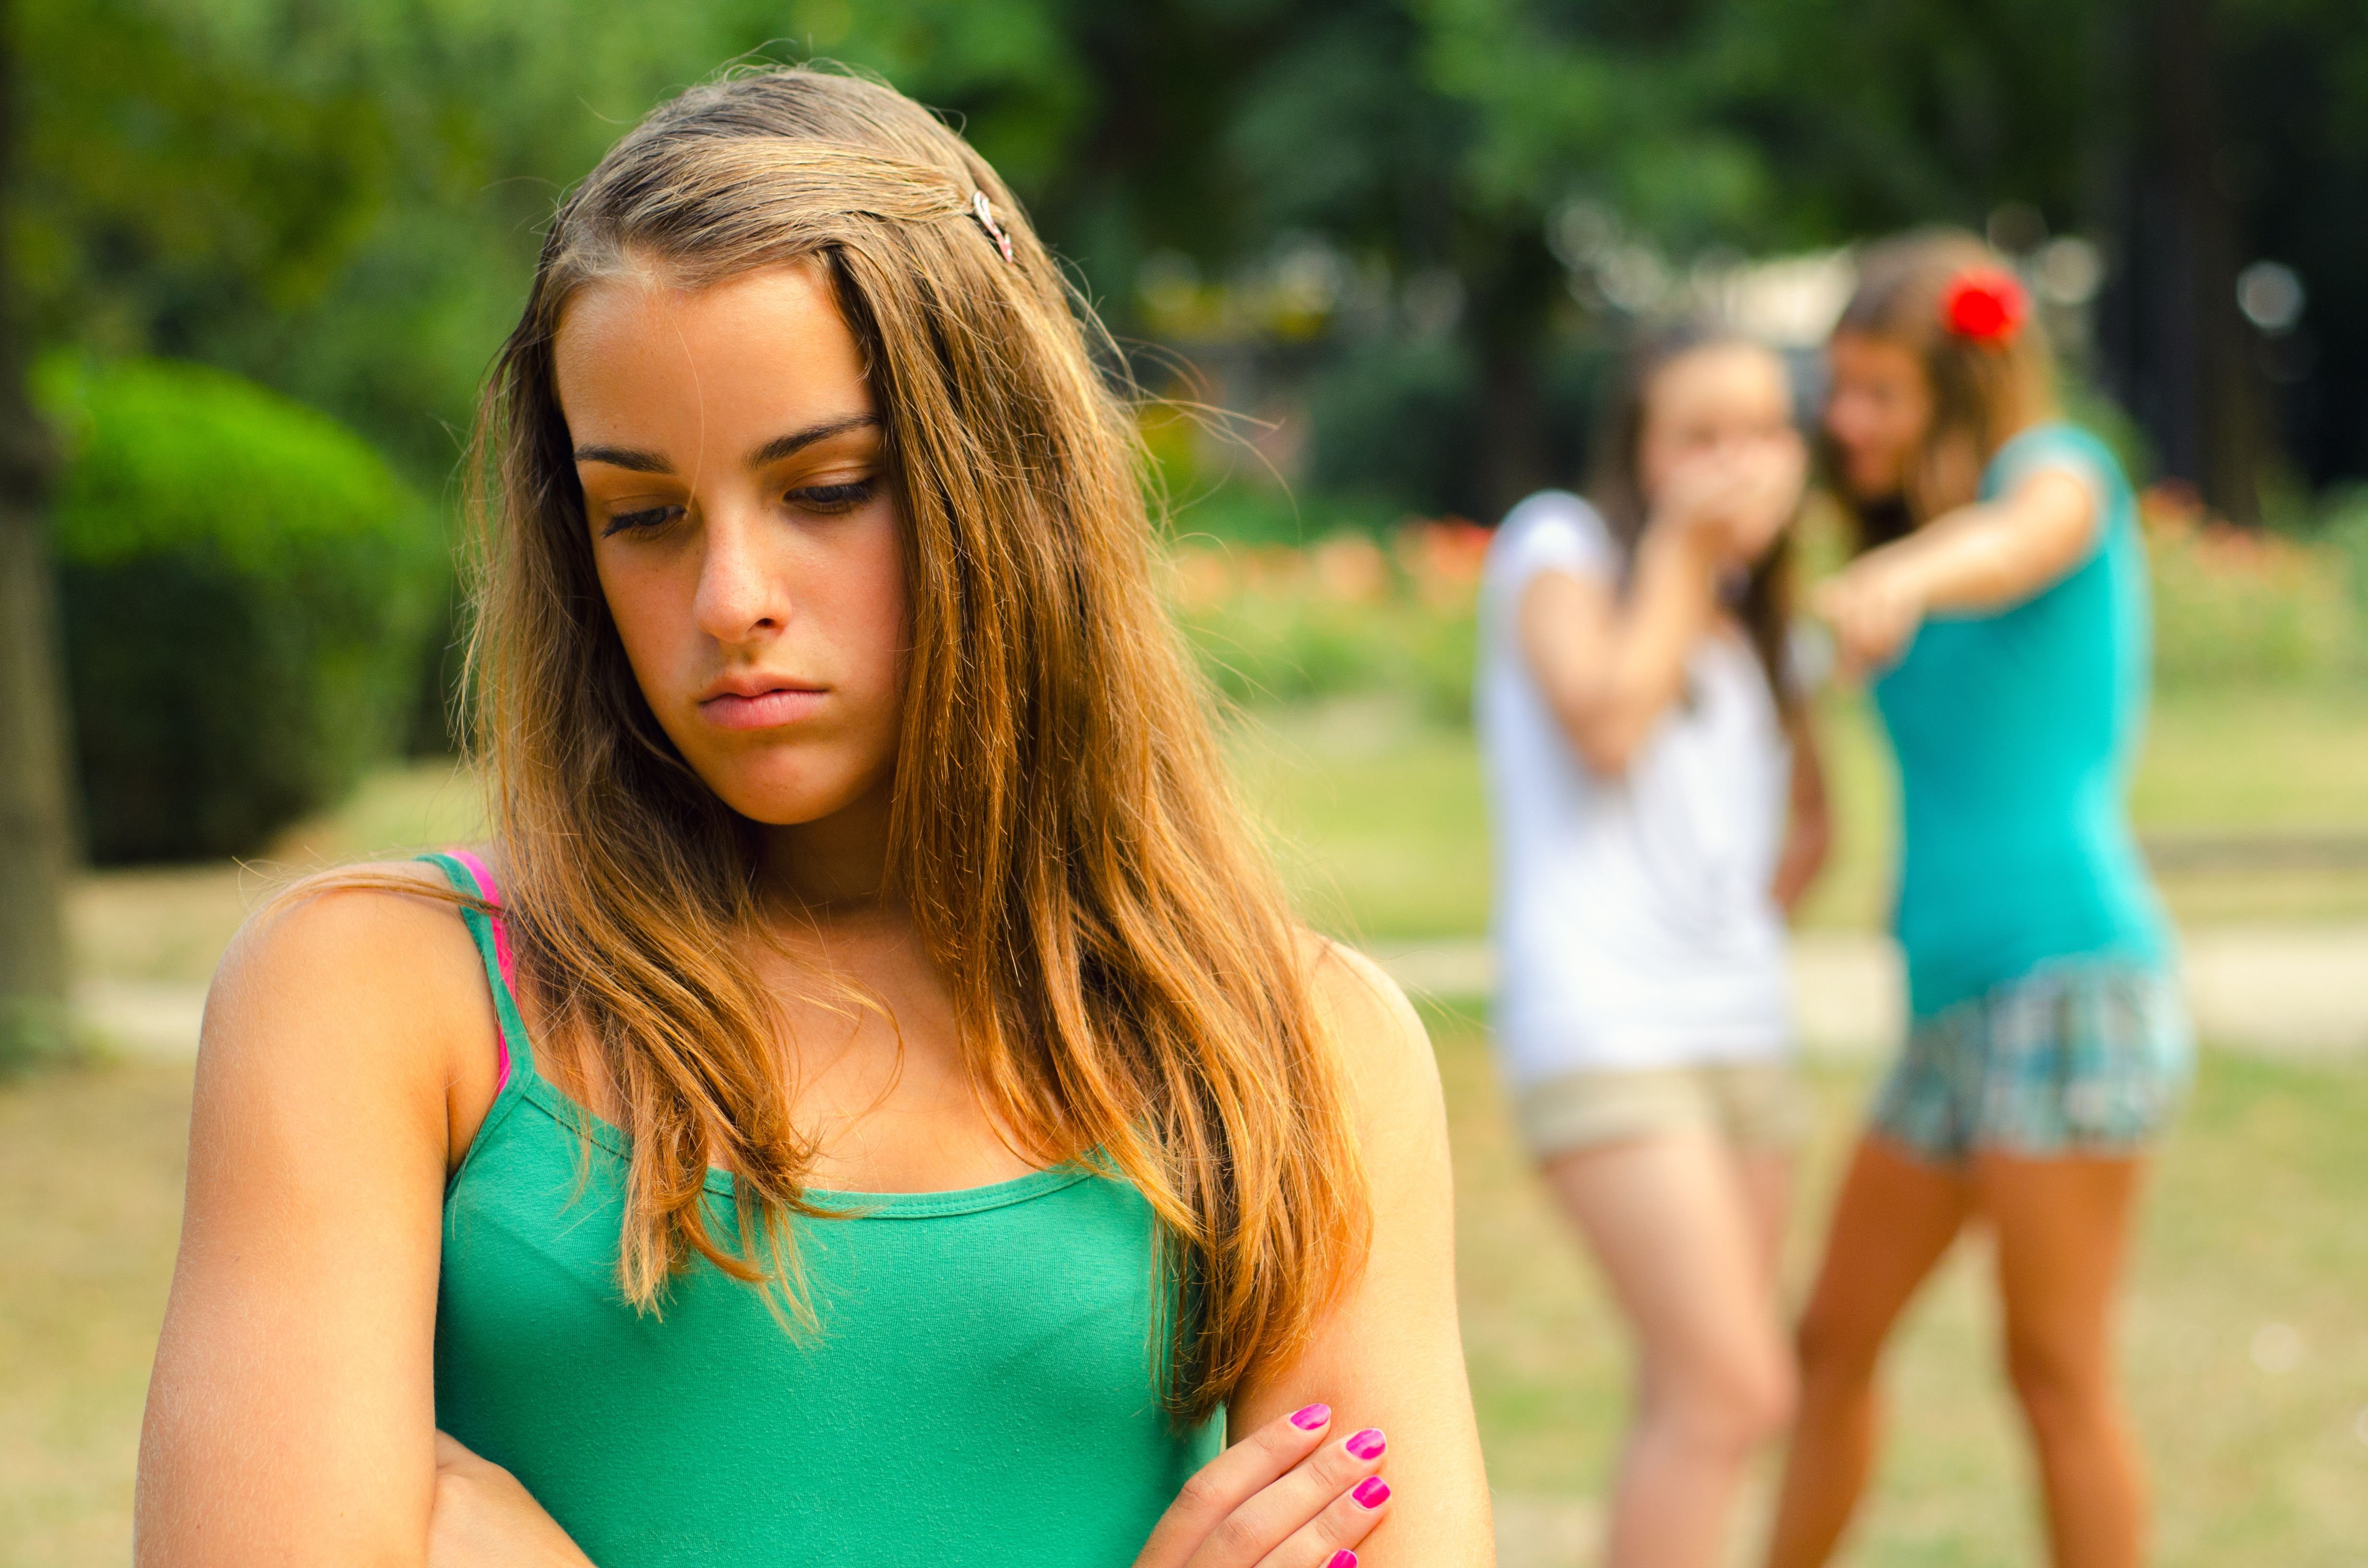 Teen girls making fun of another girl. | Source: Shutterstock